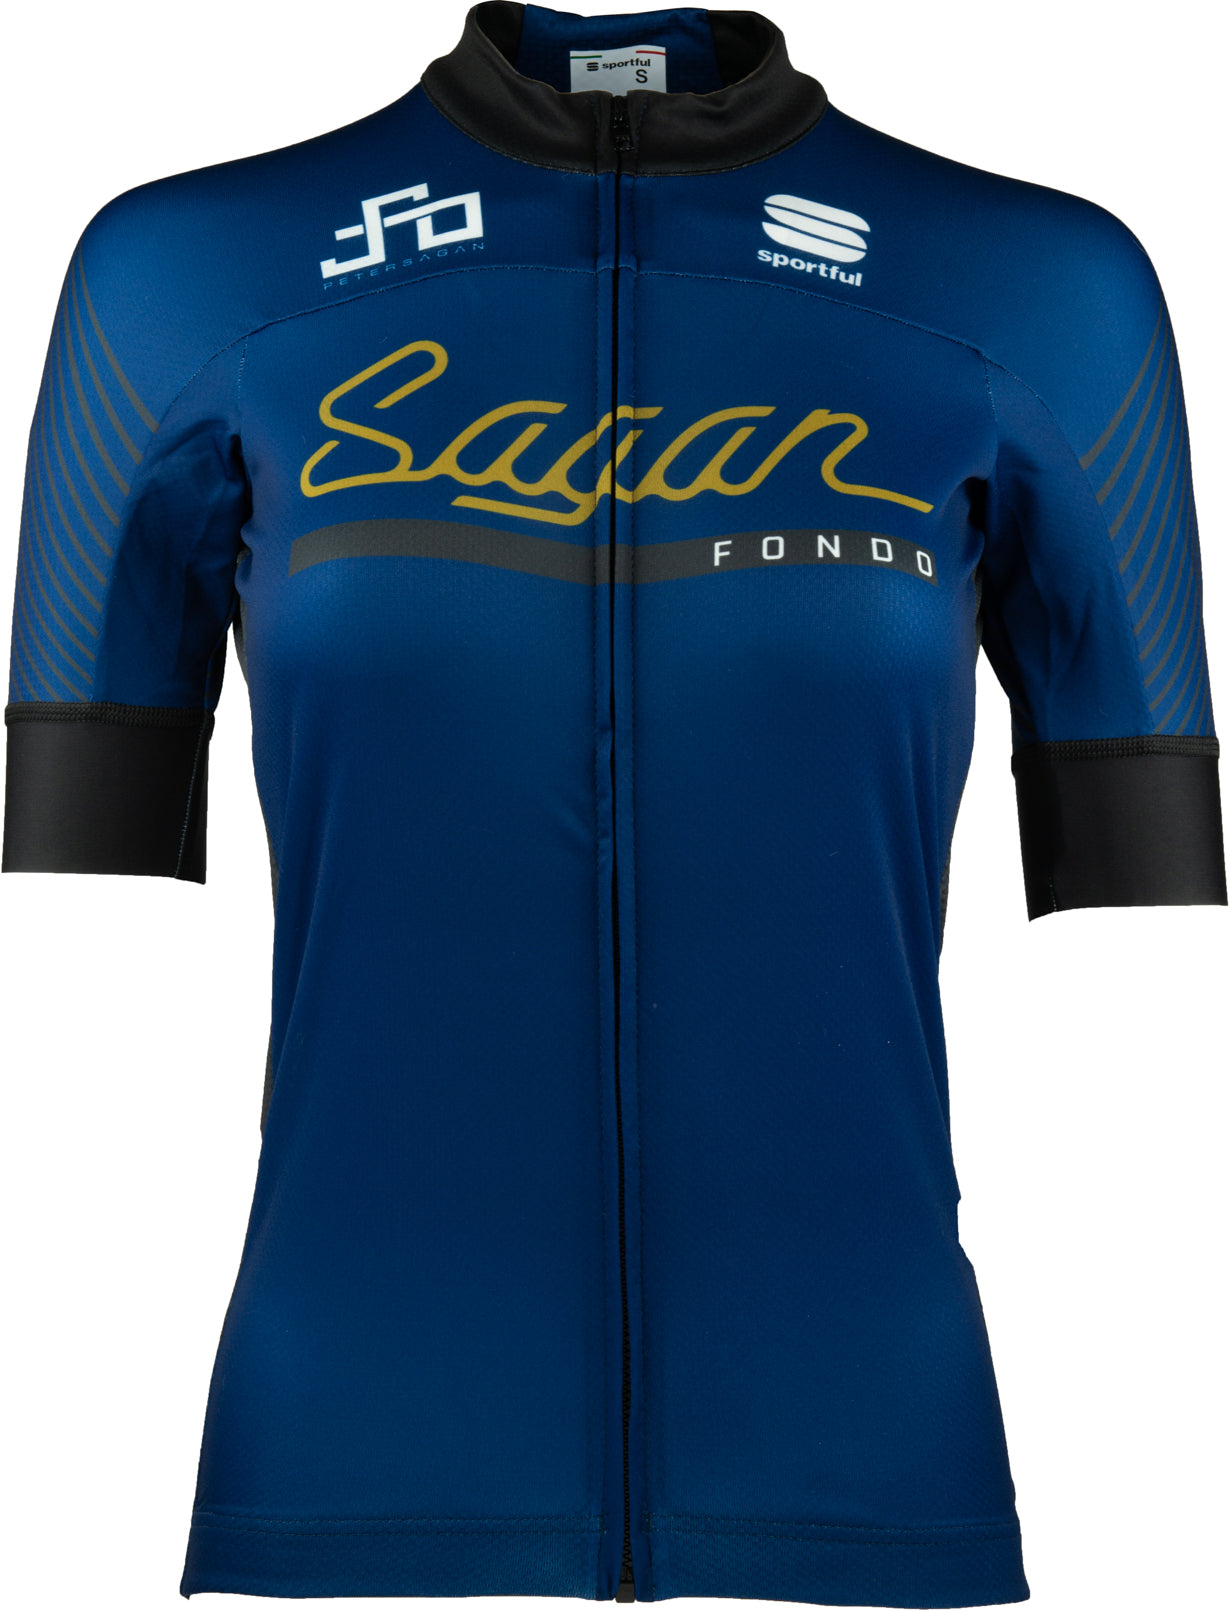 Sagan Fondo Road Edition Jersey - Unisex